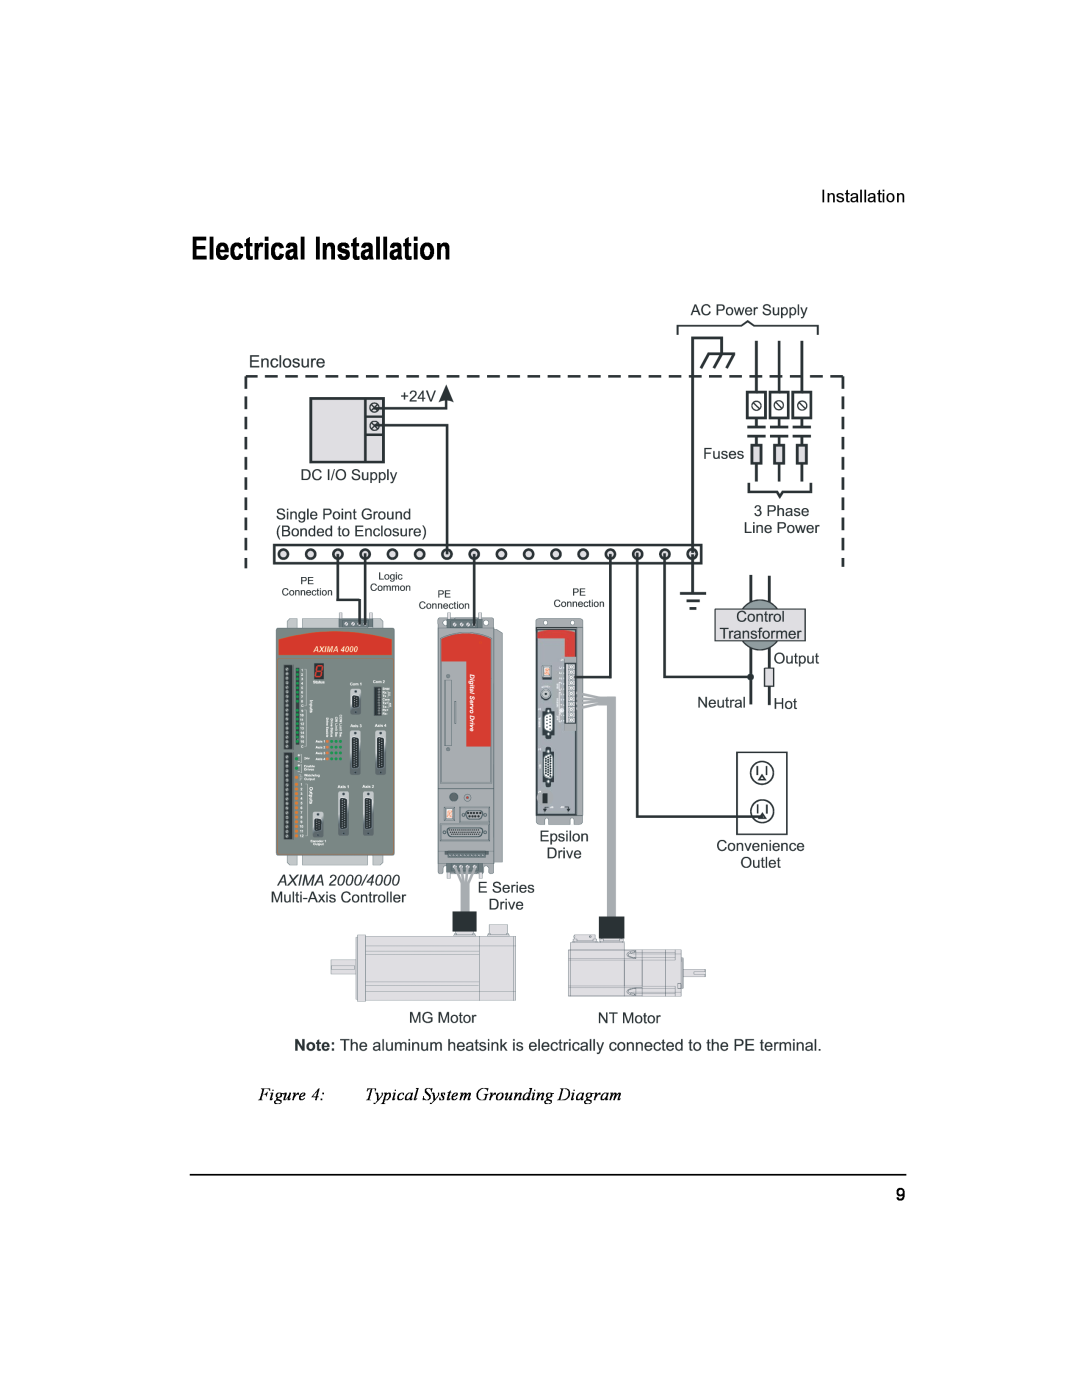 Emerson Epsilon Eb Digital Servo Drive, 400501-05 Electrical Installation, Typical System Grounding Diagram 